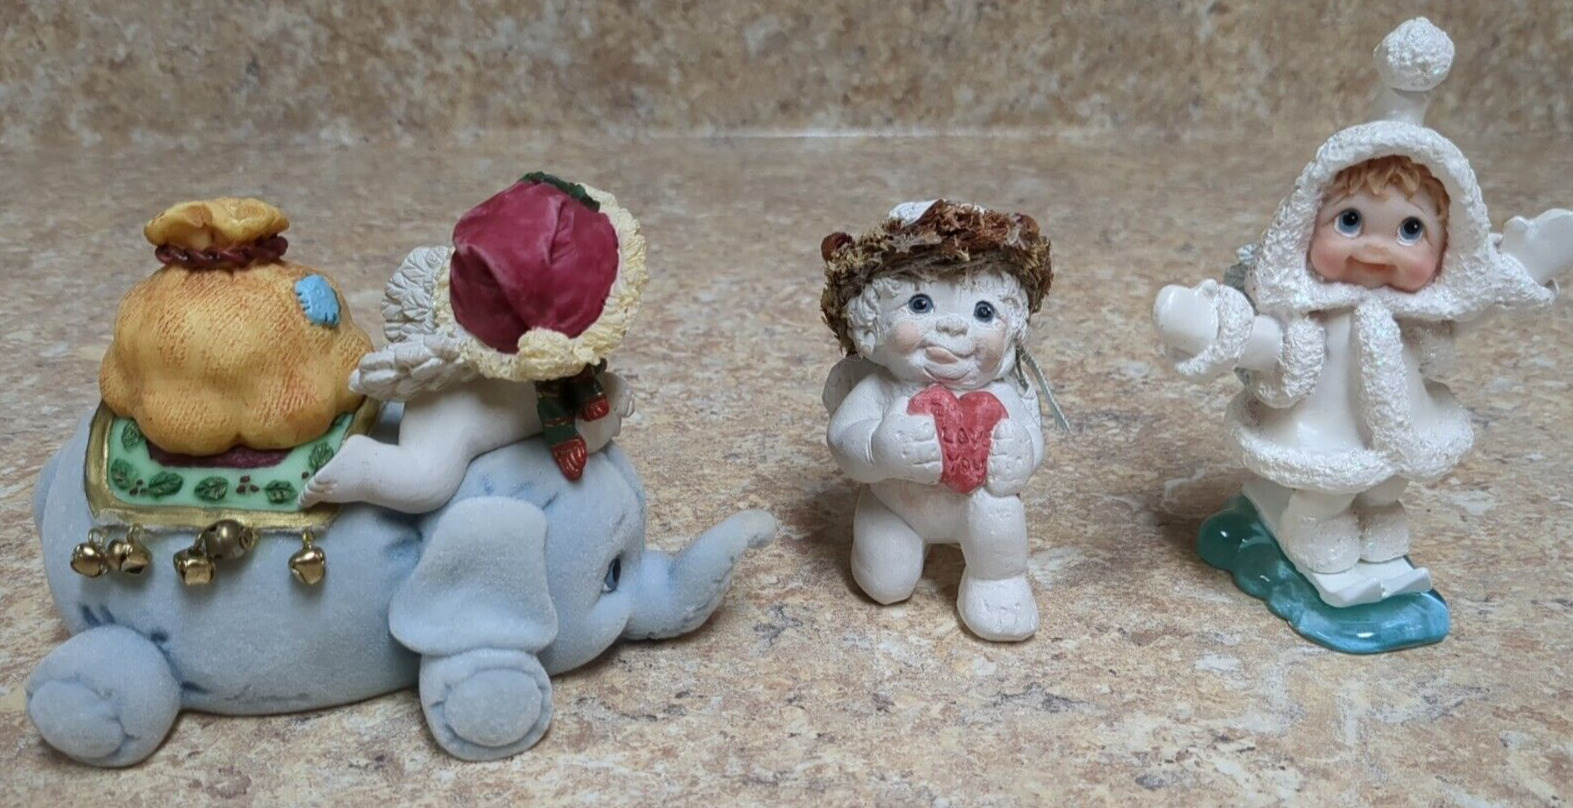 3 Dreamsicles Figurines, My Big Buddy, Baby Kneeling, Bunny Slope